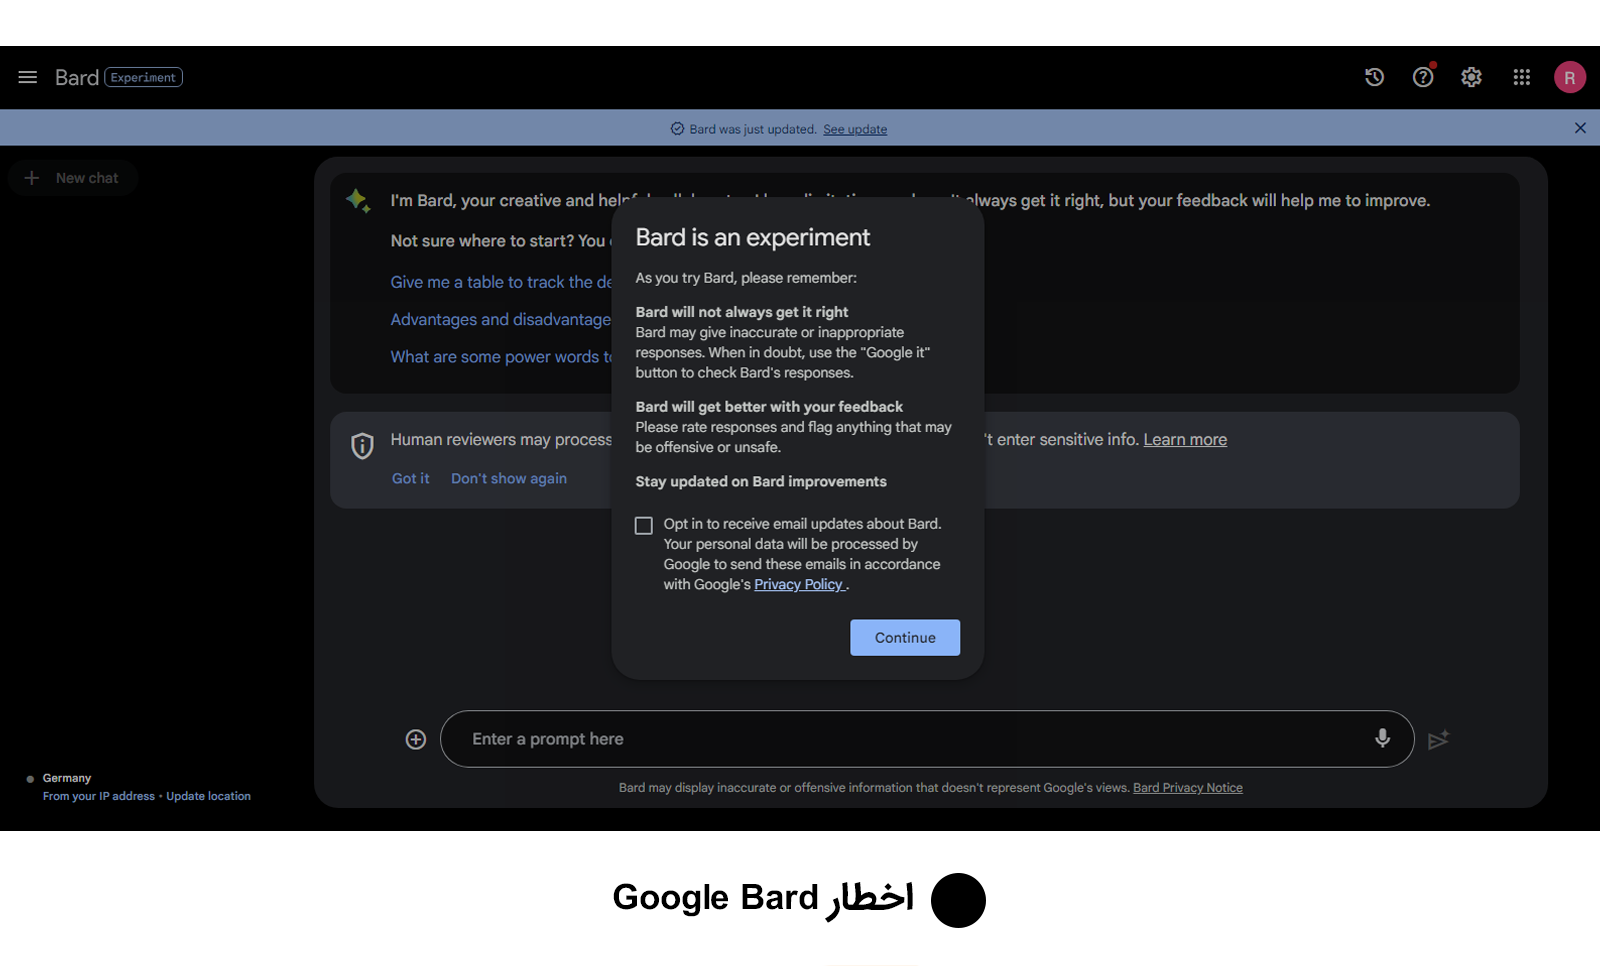 صفحه خطار Google Bard